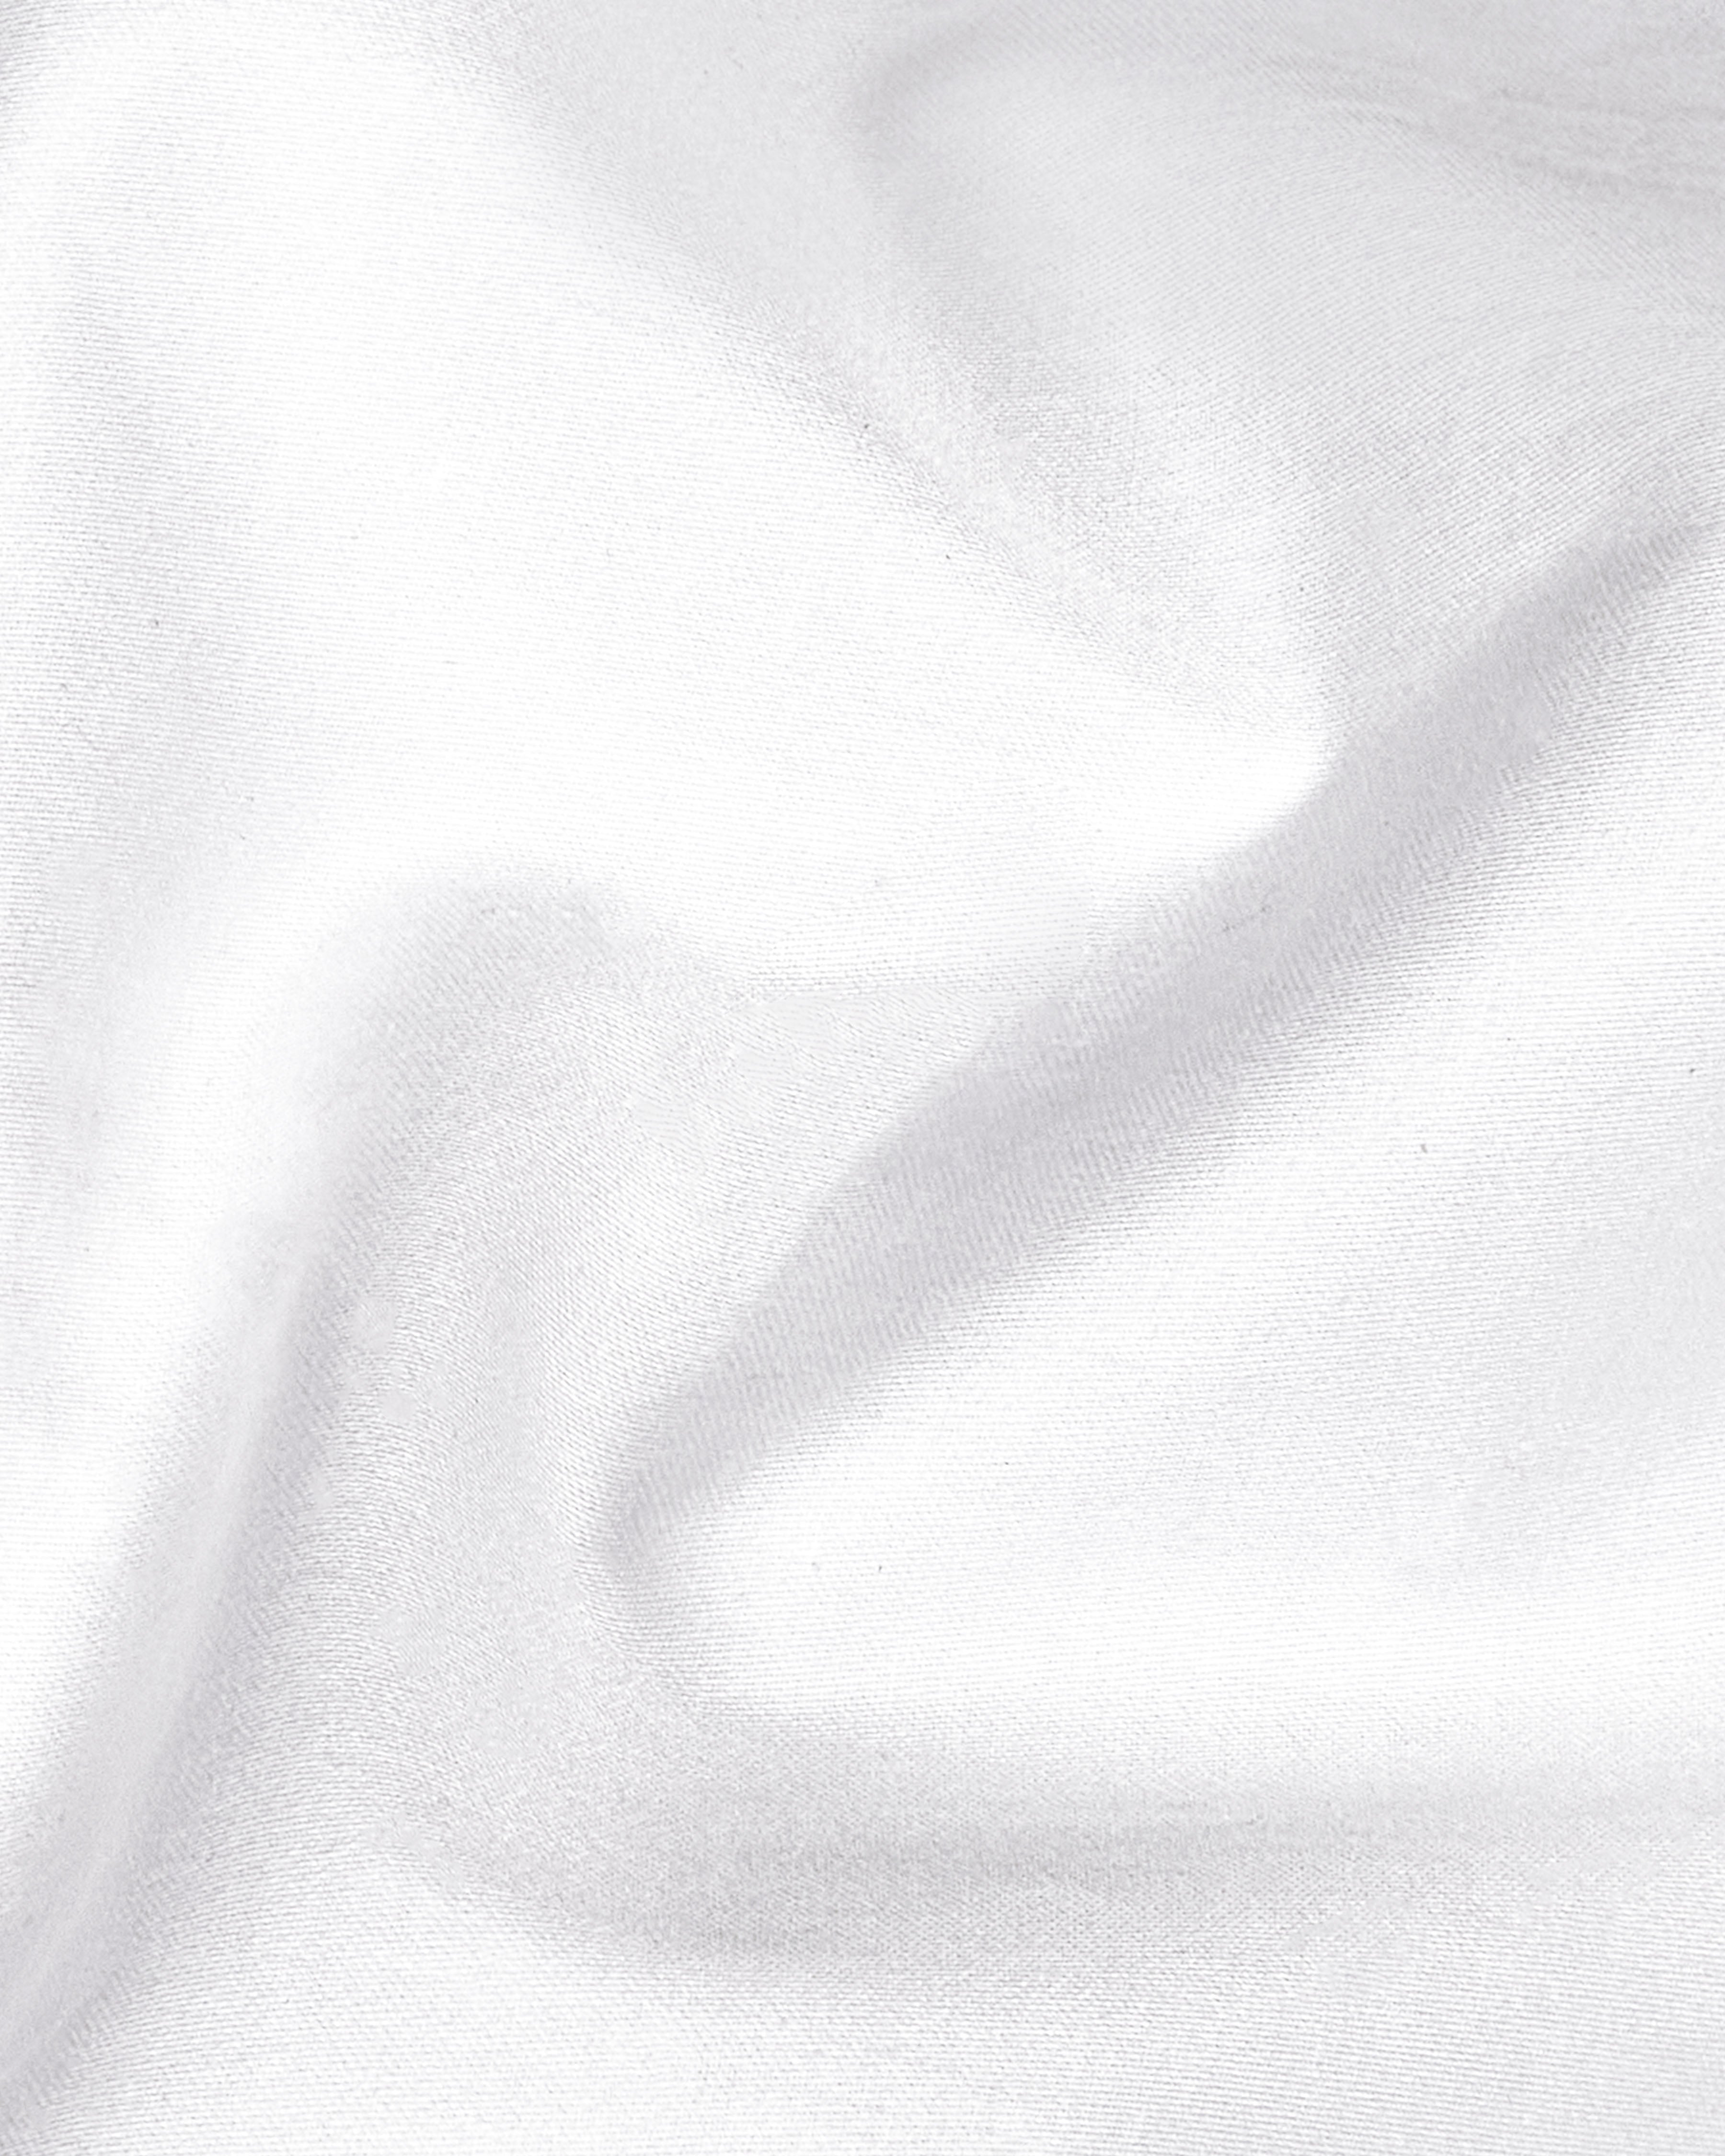 Bright White Subtle Sheen with Multicolour Card Embroidered Super Soft Premium Cotton Kurta Shirt 2670-KS-E027-38,2670-KS-E027-H-38,2670-KS-E027-39,2670-KS-E027-H-39,2670-KS-E027-40,2670-KS-E027-H-40,2670-KS-E027-42,2670-KS-E027-H-42,2670-KS-E027-44,2670-KS-E027-H-44,2670-KS-E027-46,2670-KS-E027-H-46,2670-KS-E027-48,2670-KS-E027-H-48,2670-KS-E027-50,2670-KS-E027-H-50,2670-KS-E027-52,2670-KS-E027-H-52